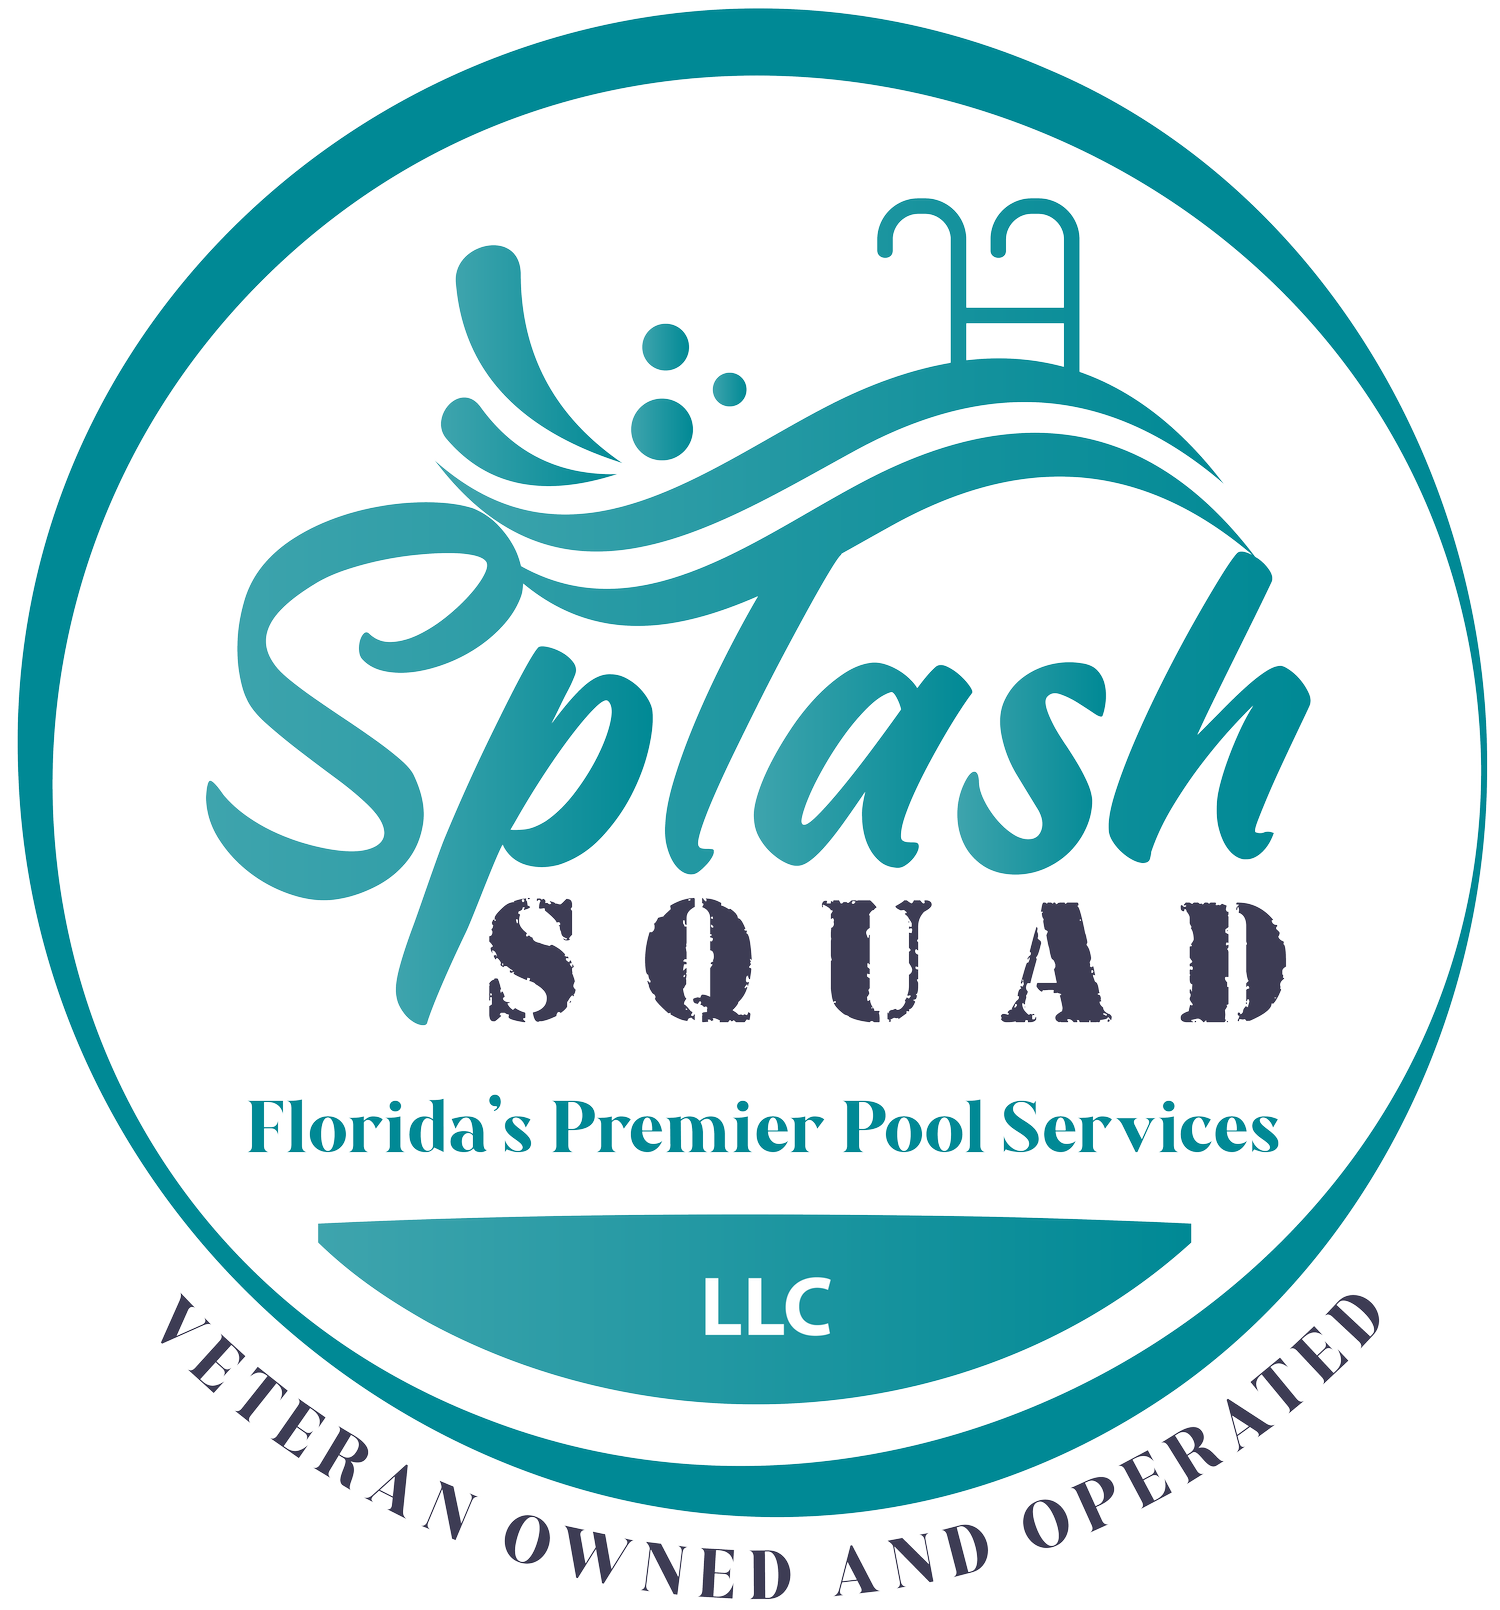 Splash SQUAD Florida